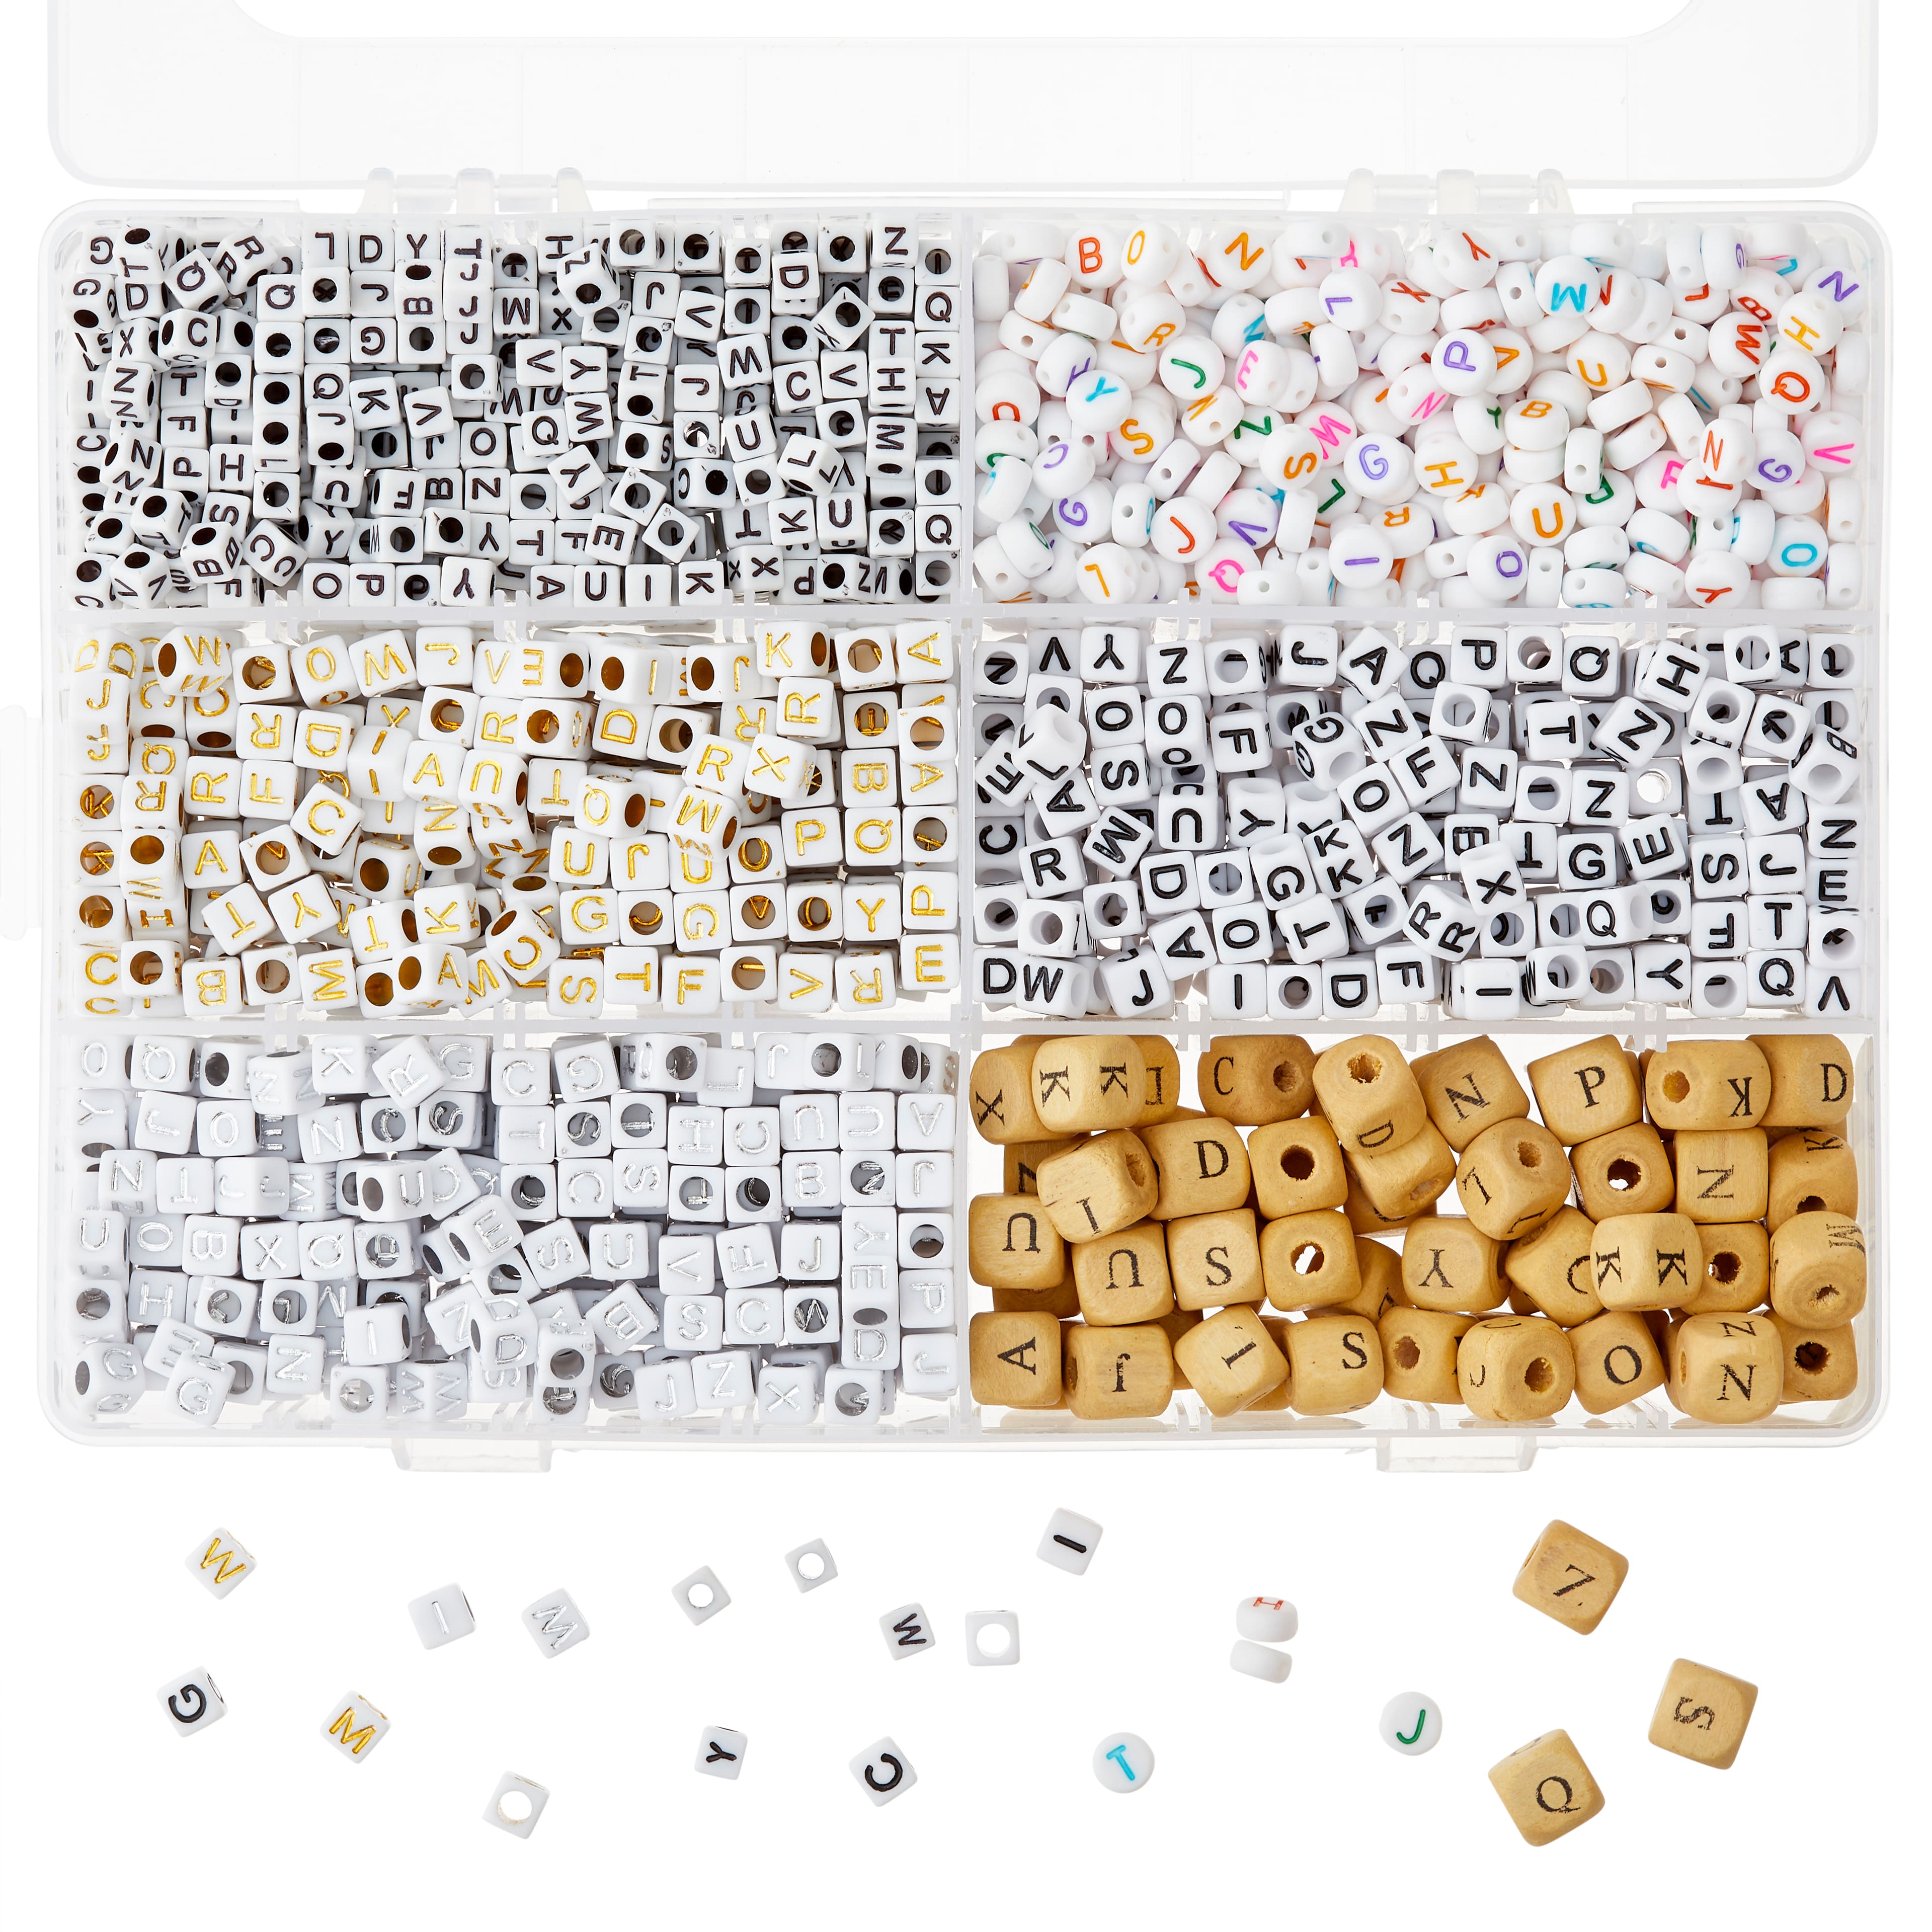 Alphabet Square Beads, 7mm by Bead Landing | Michaels